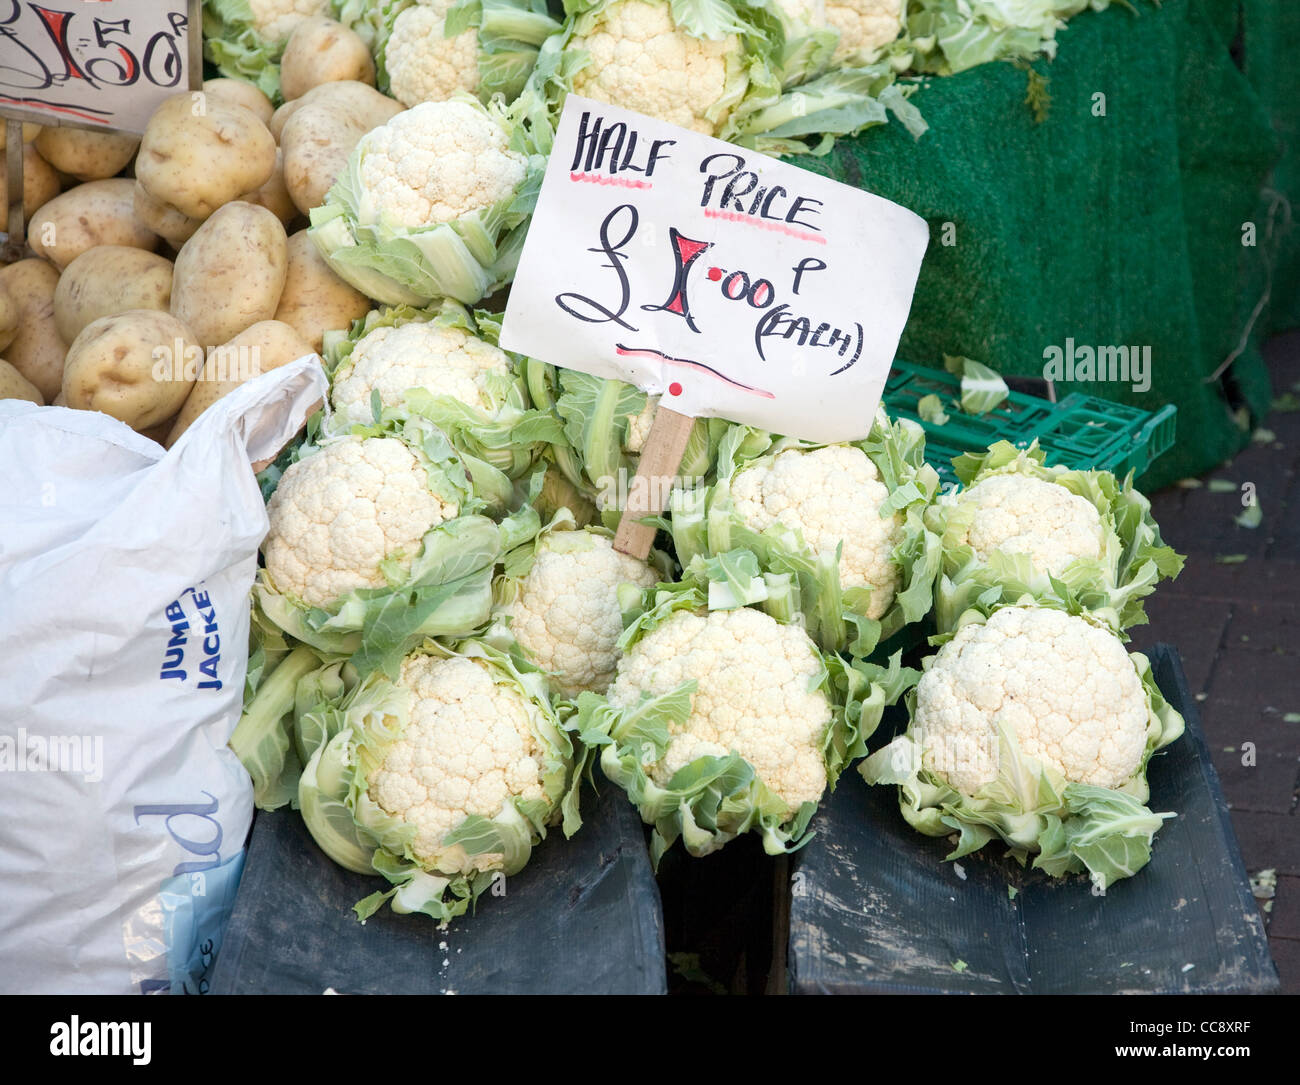 Half price cauliflower for sale market stall £1 each Stock Photo